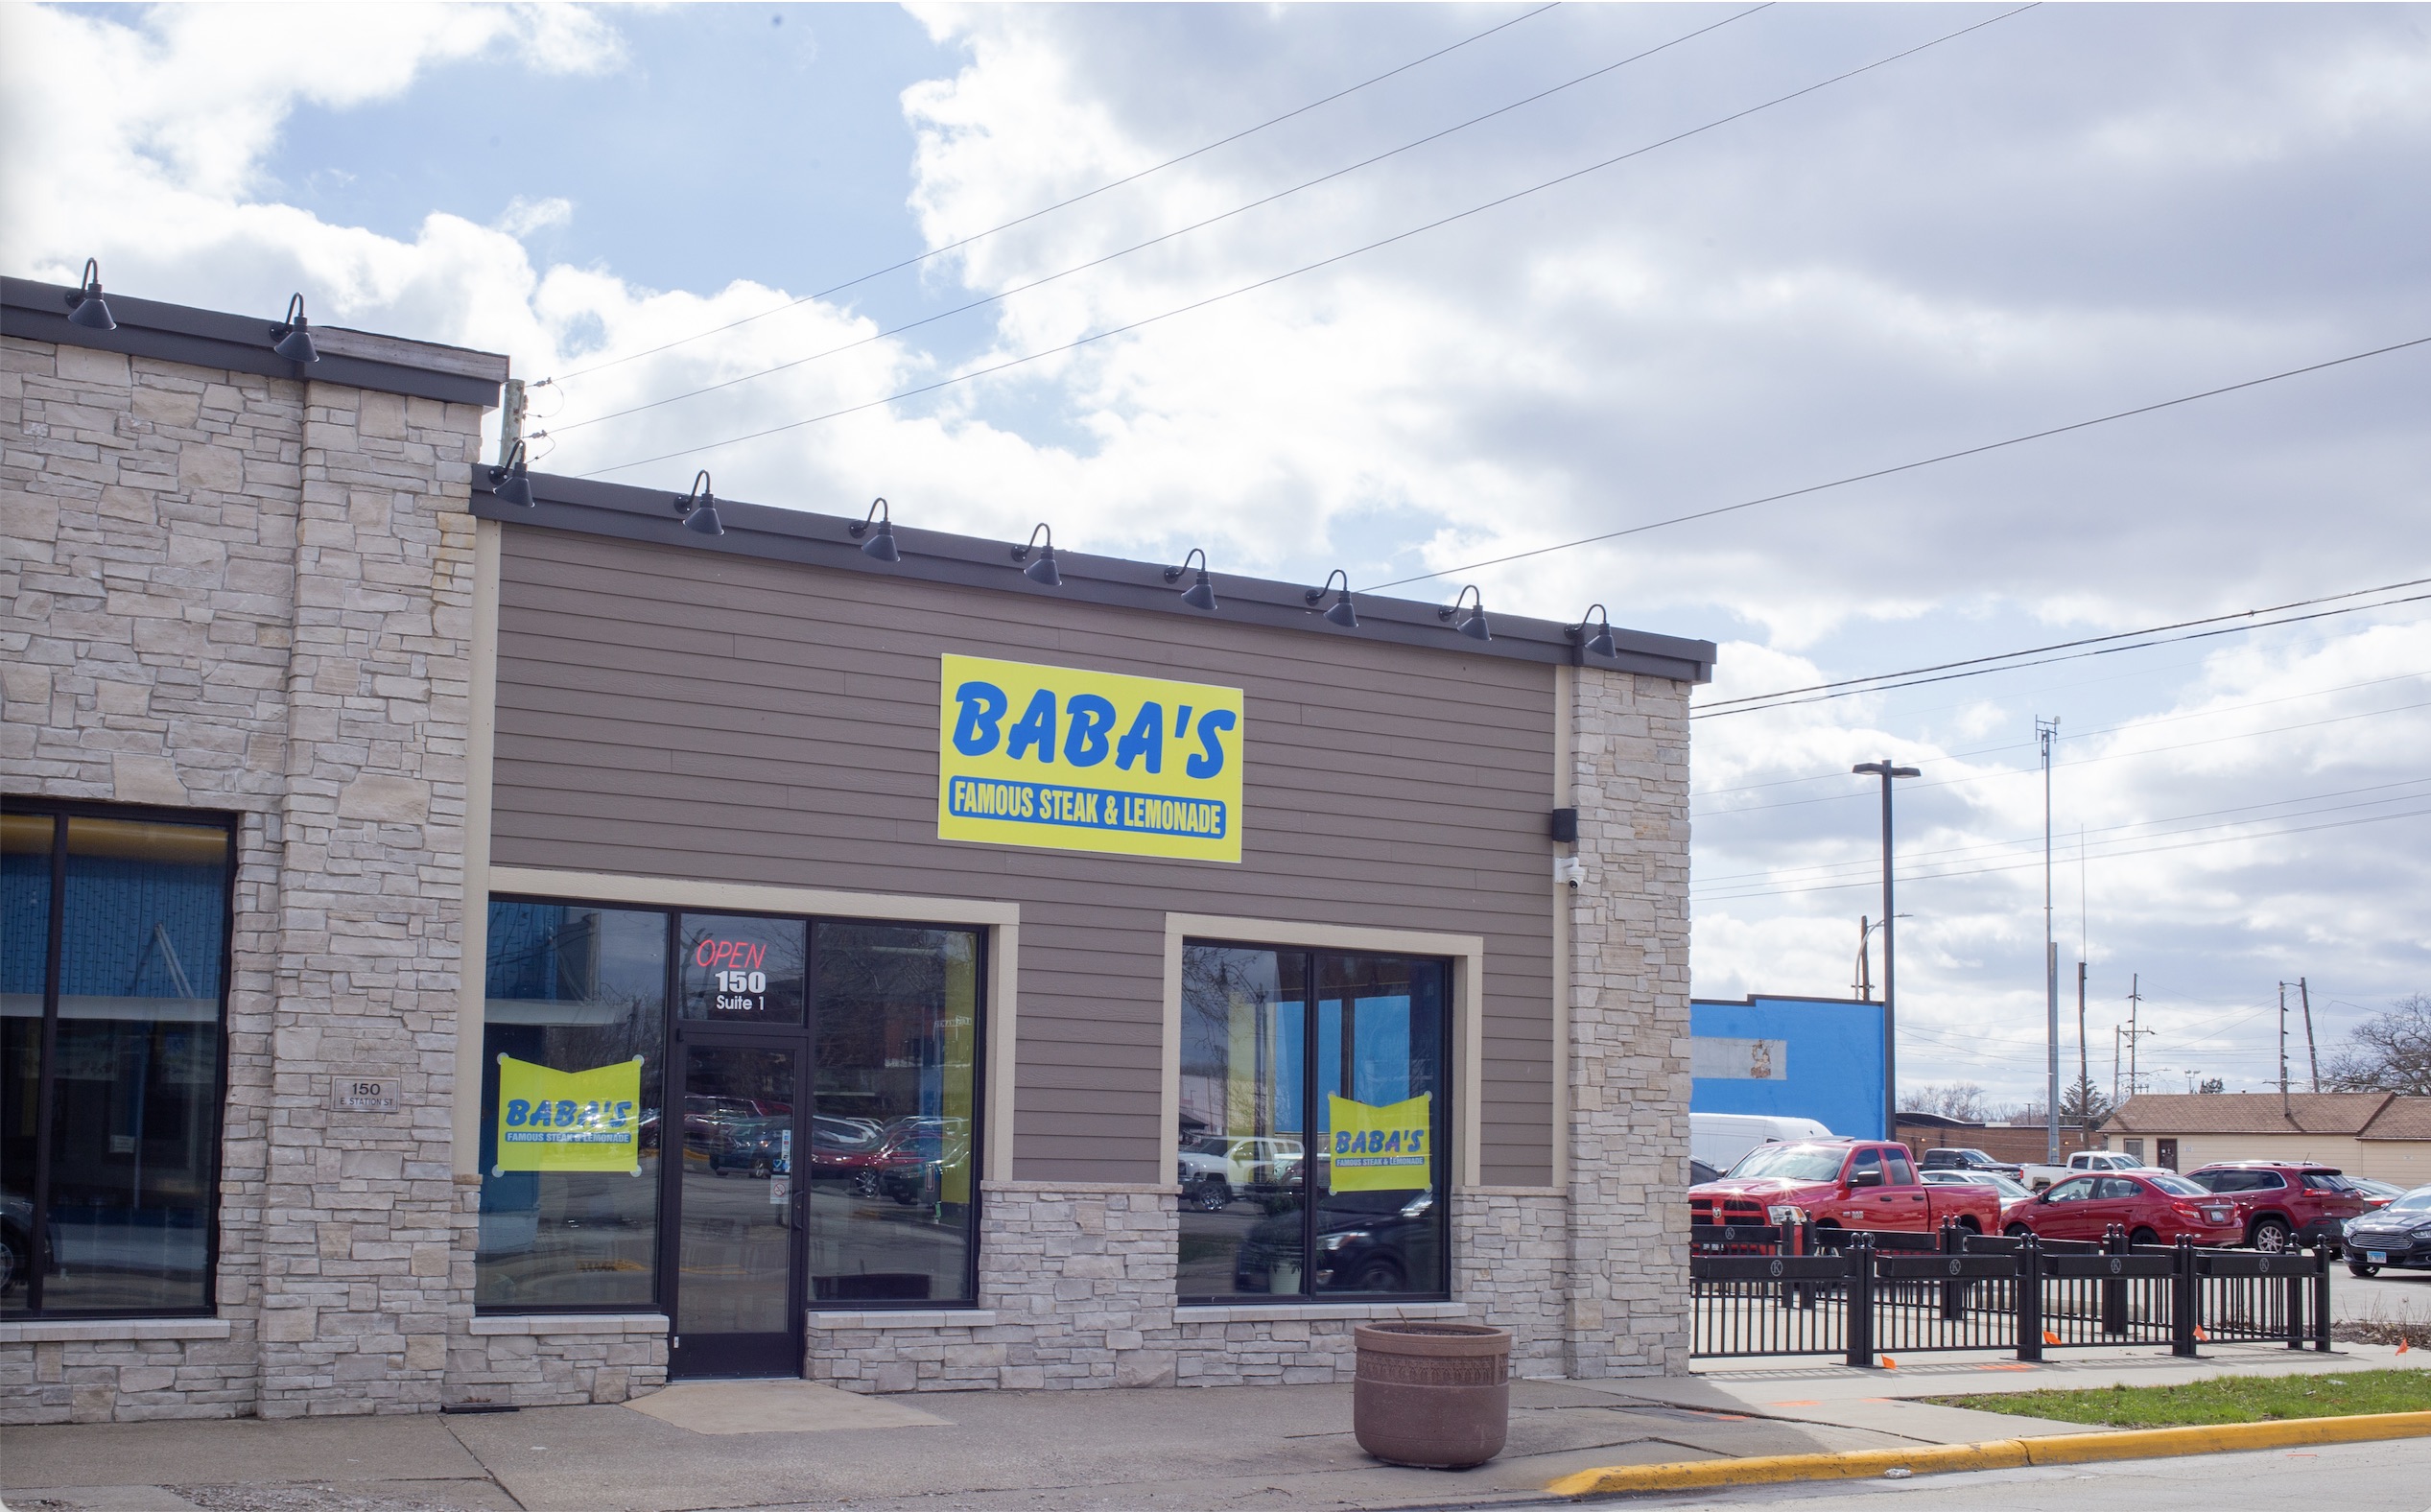 Baba's Famous Steak & Lemonade Opens in Downtown Kankakee